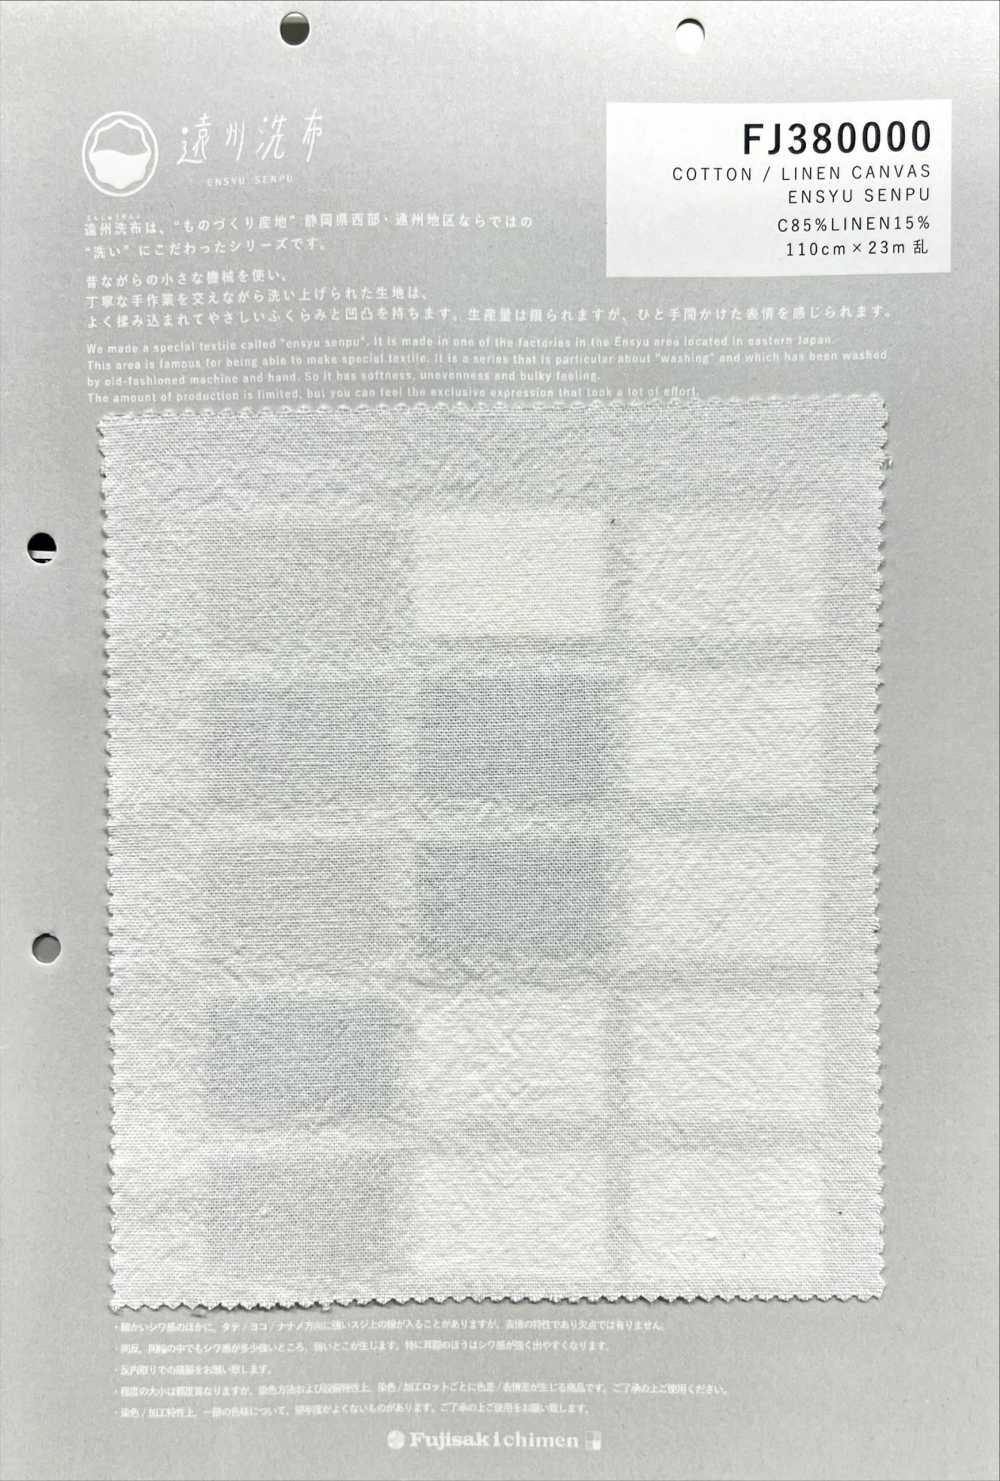 FJ380000 LONA ALGODÓN/LINO ENSYU SENPU[Fabrica Textil] Fujisaki Textile